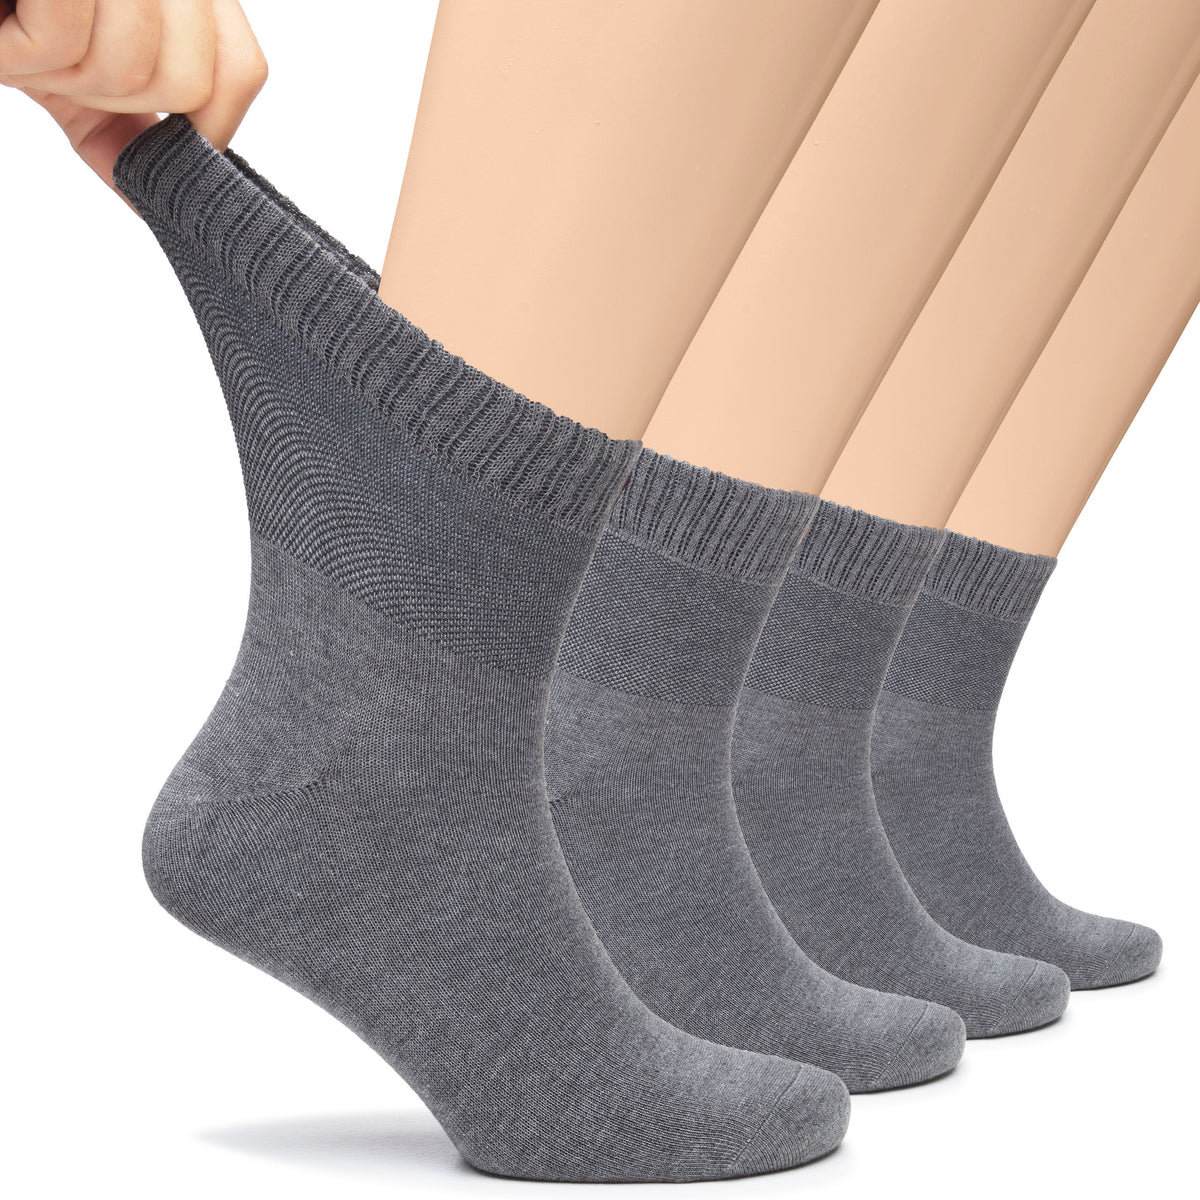 Hugh Ugoli Lightweight Men's Diabetic Ankle Socks Bamboo Thin Socks Seamless Toe and Non-Binding Top, 4 Pairs, Shoe Size 8-11/11-13 | Shoe Size: 8-11 | Melange Gray